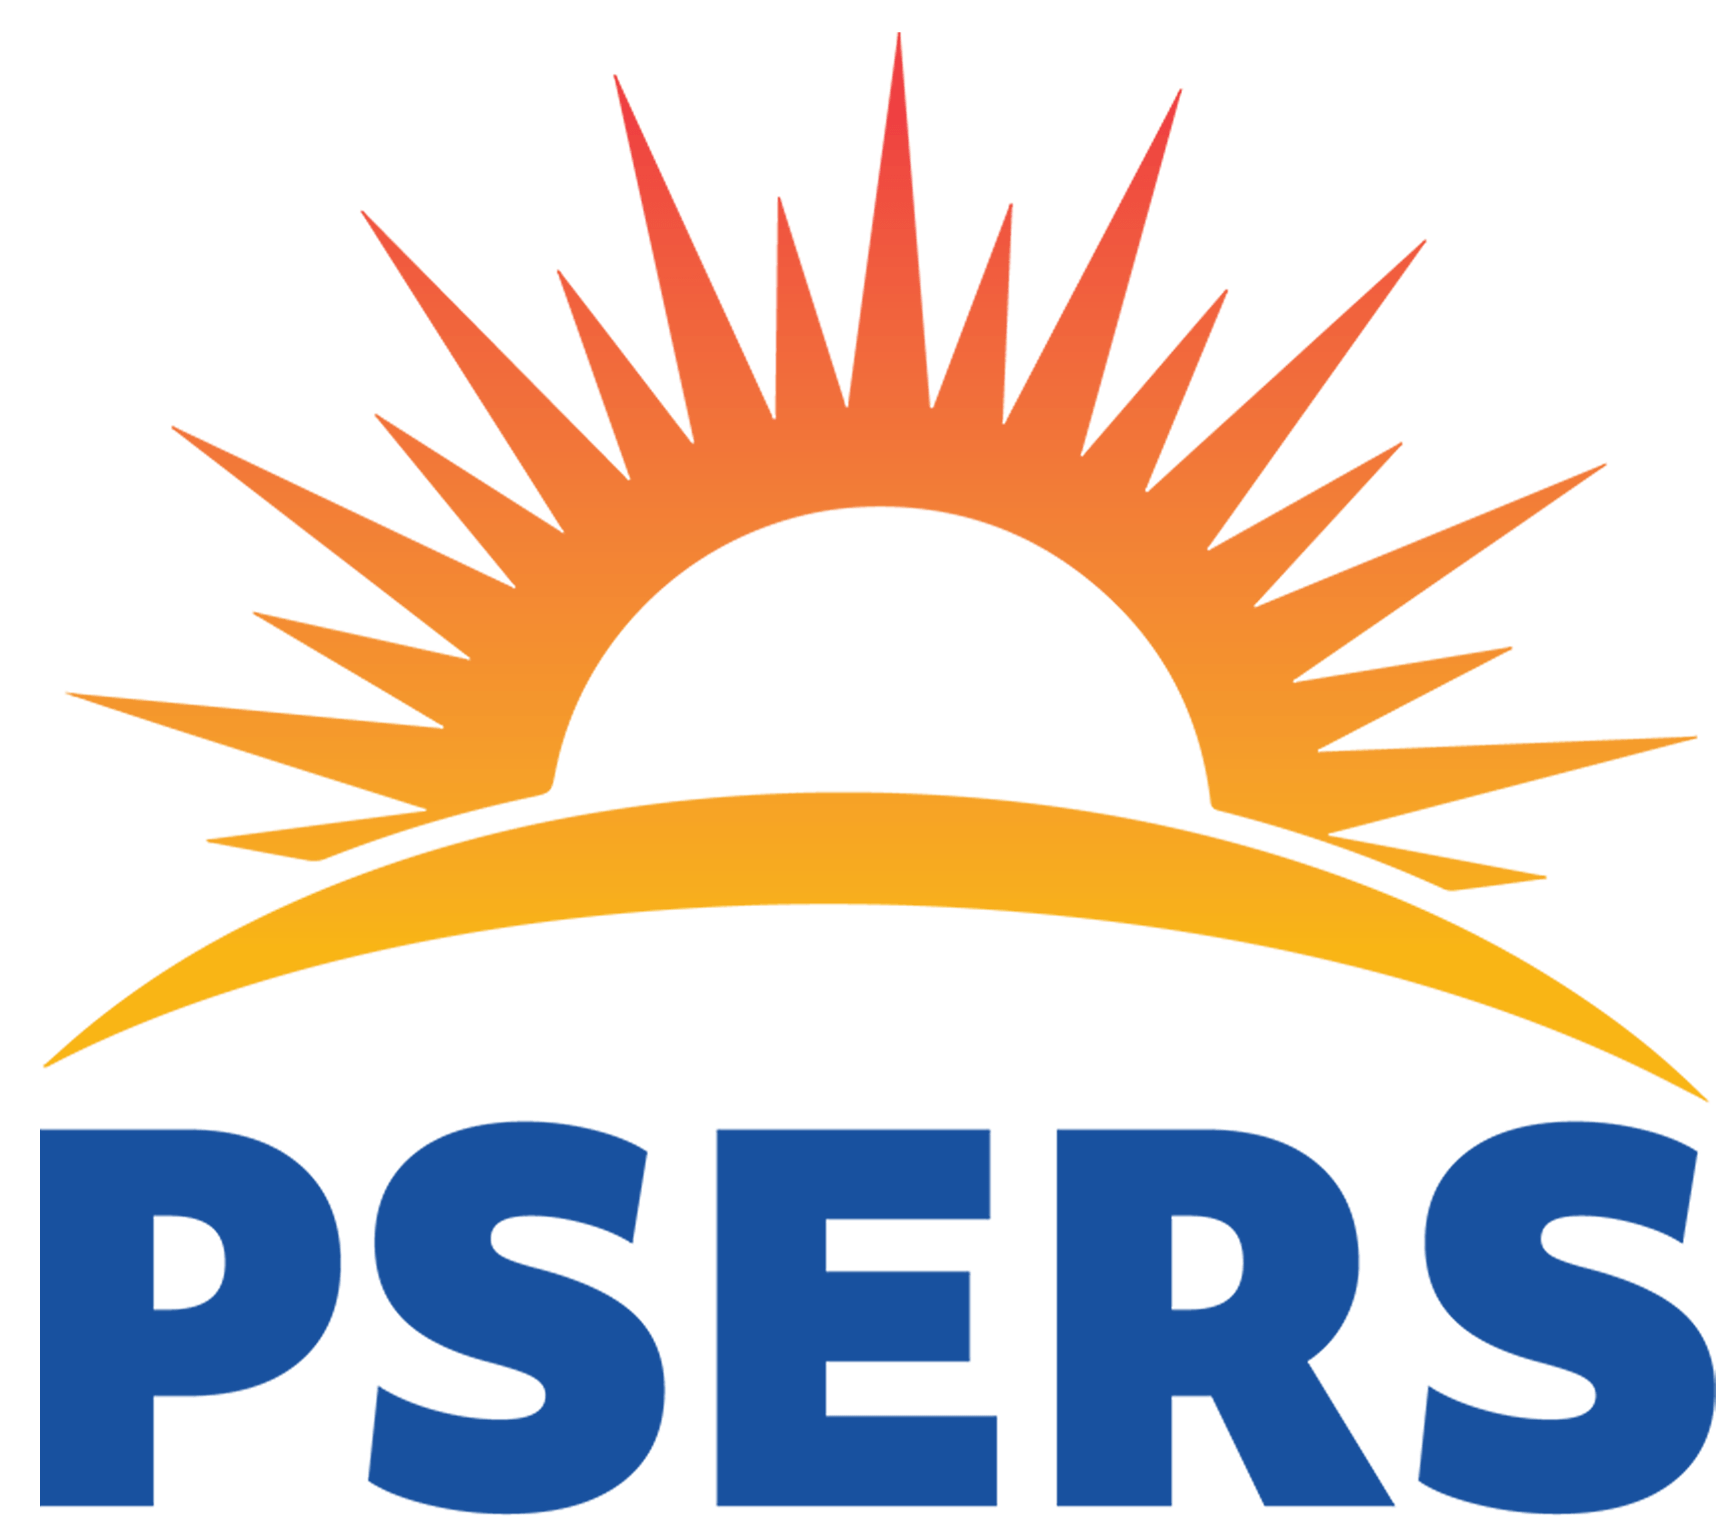 Public Logo - PSERS